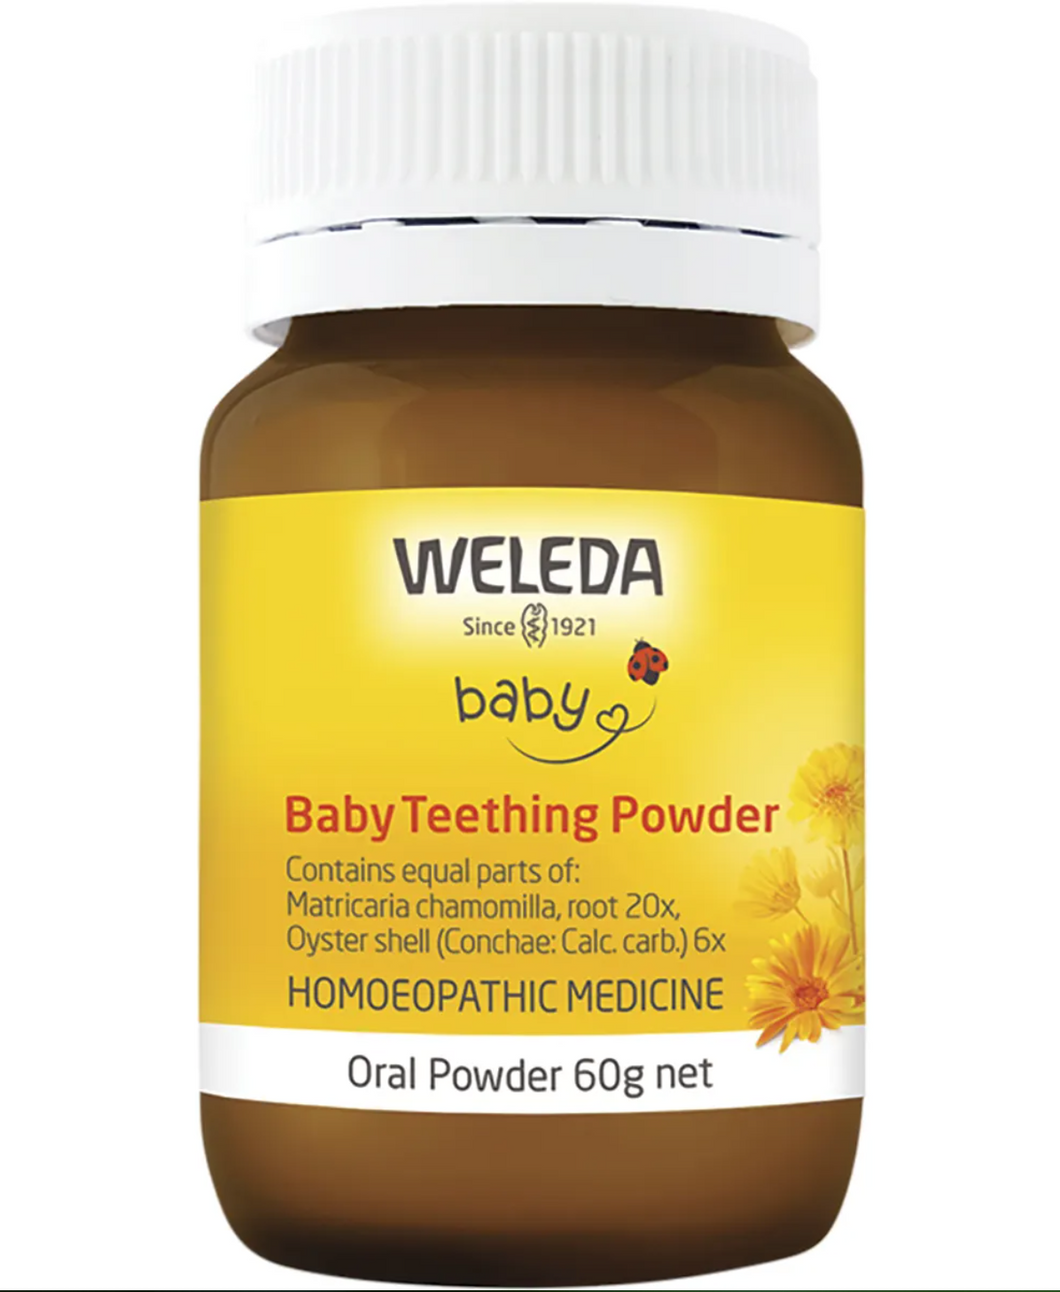 WELEDA Baby Teething Powder, Oral Powder, 60g